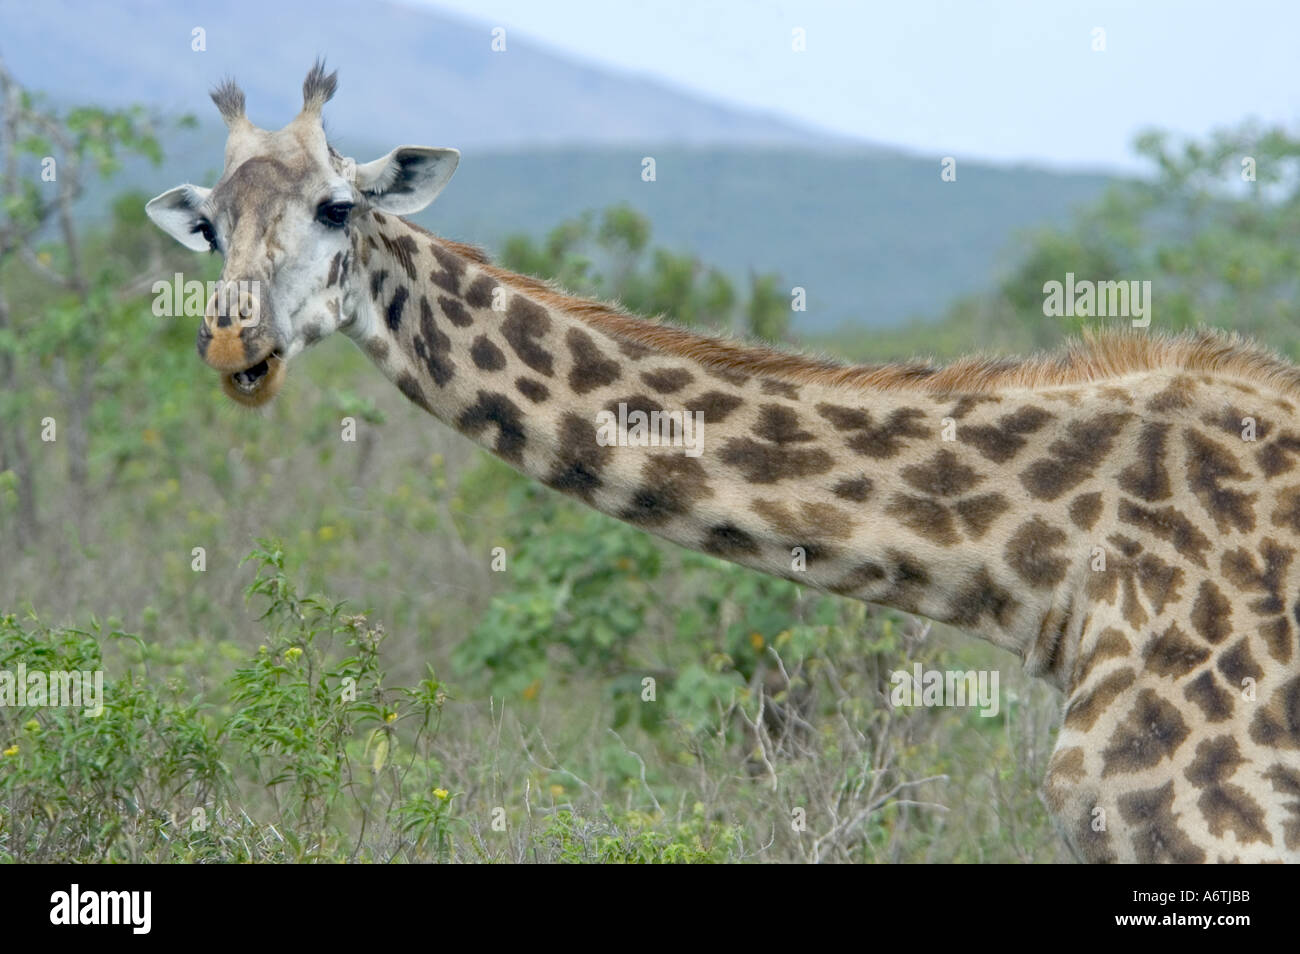 Giraffe Leaning, East Africa, Tanzania, Arusha National Park Stock Photo -  Alamy